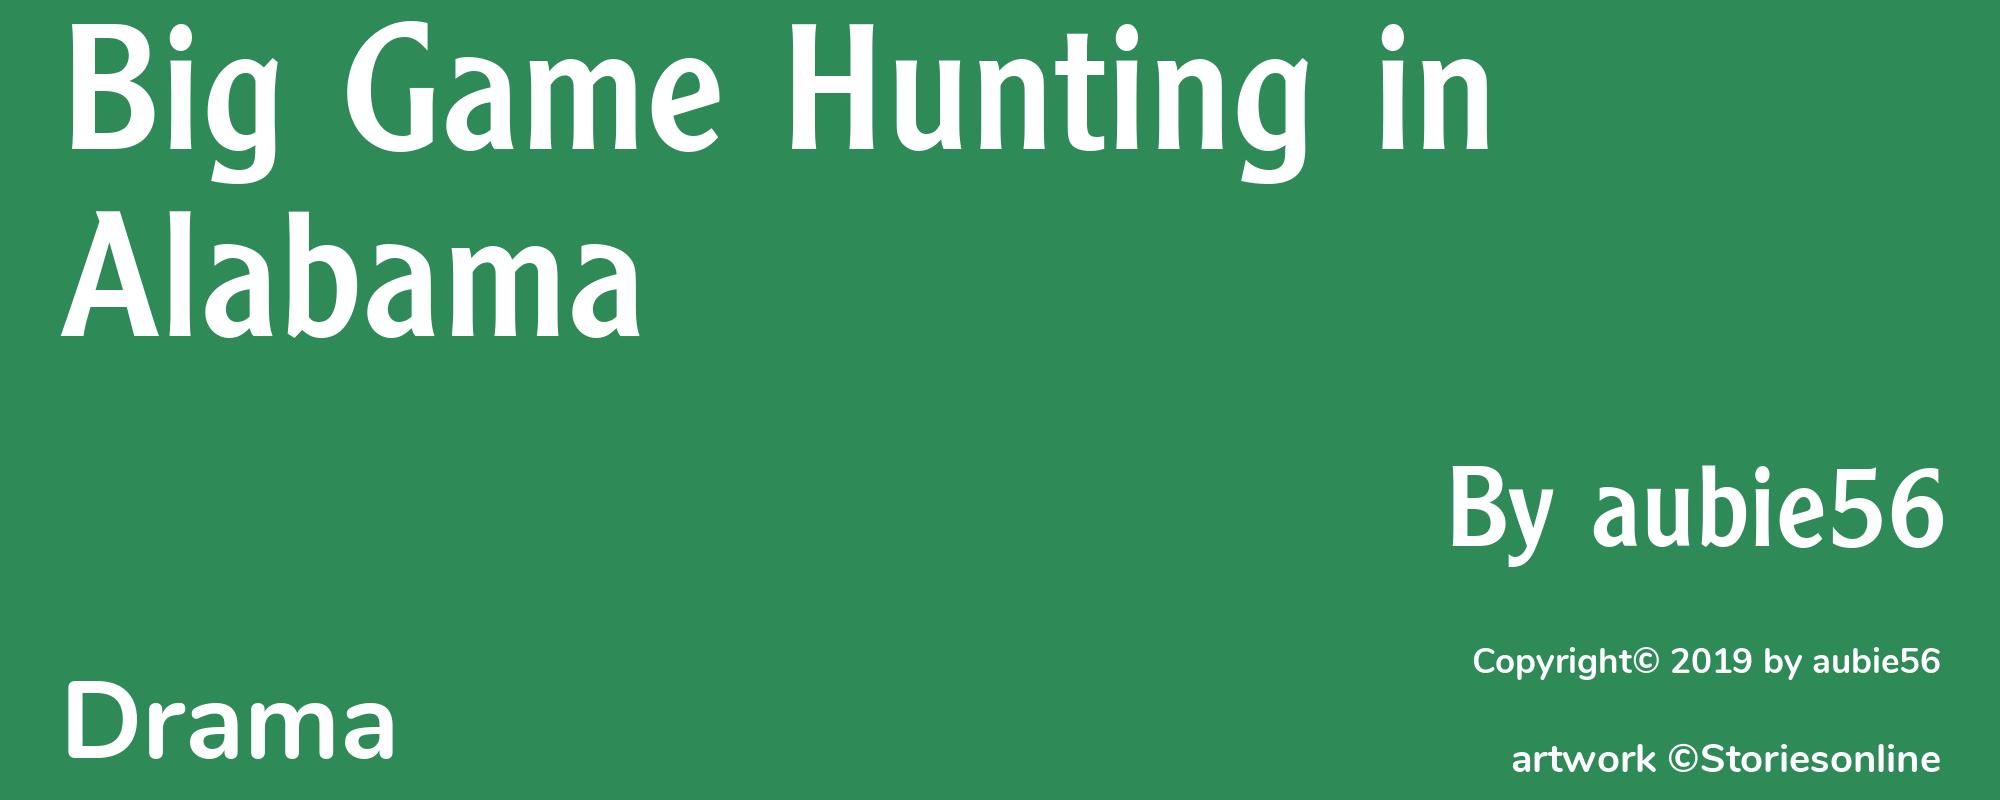 Big Game Hunting in Alabama - Cover